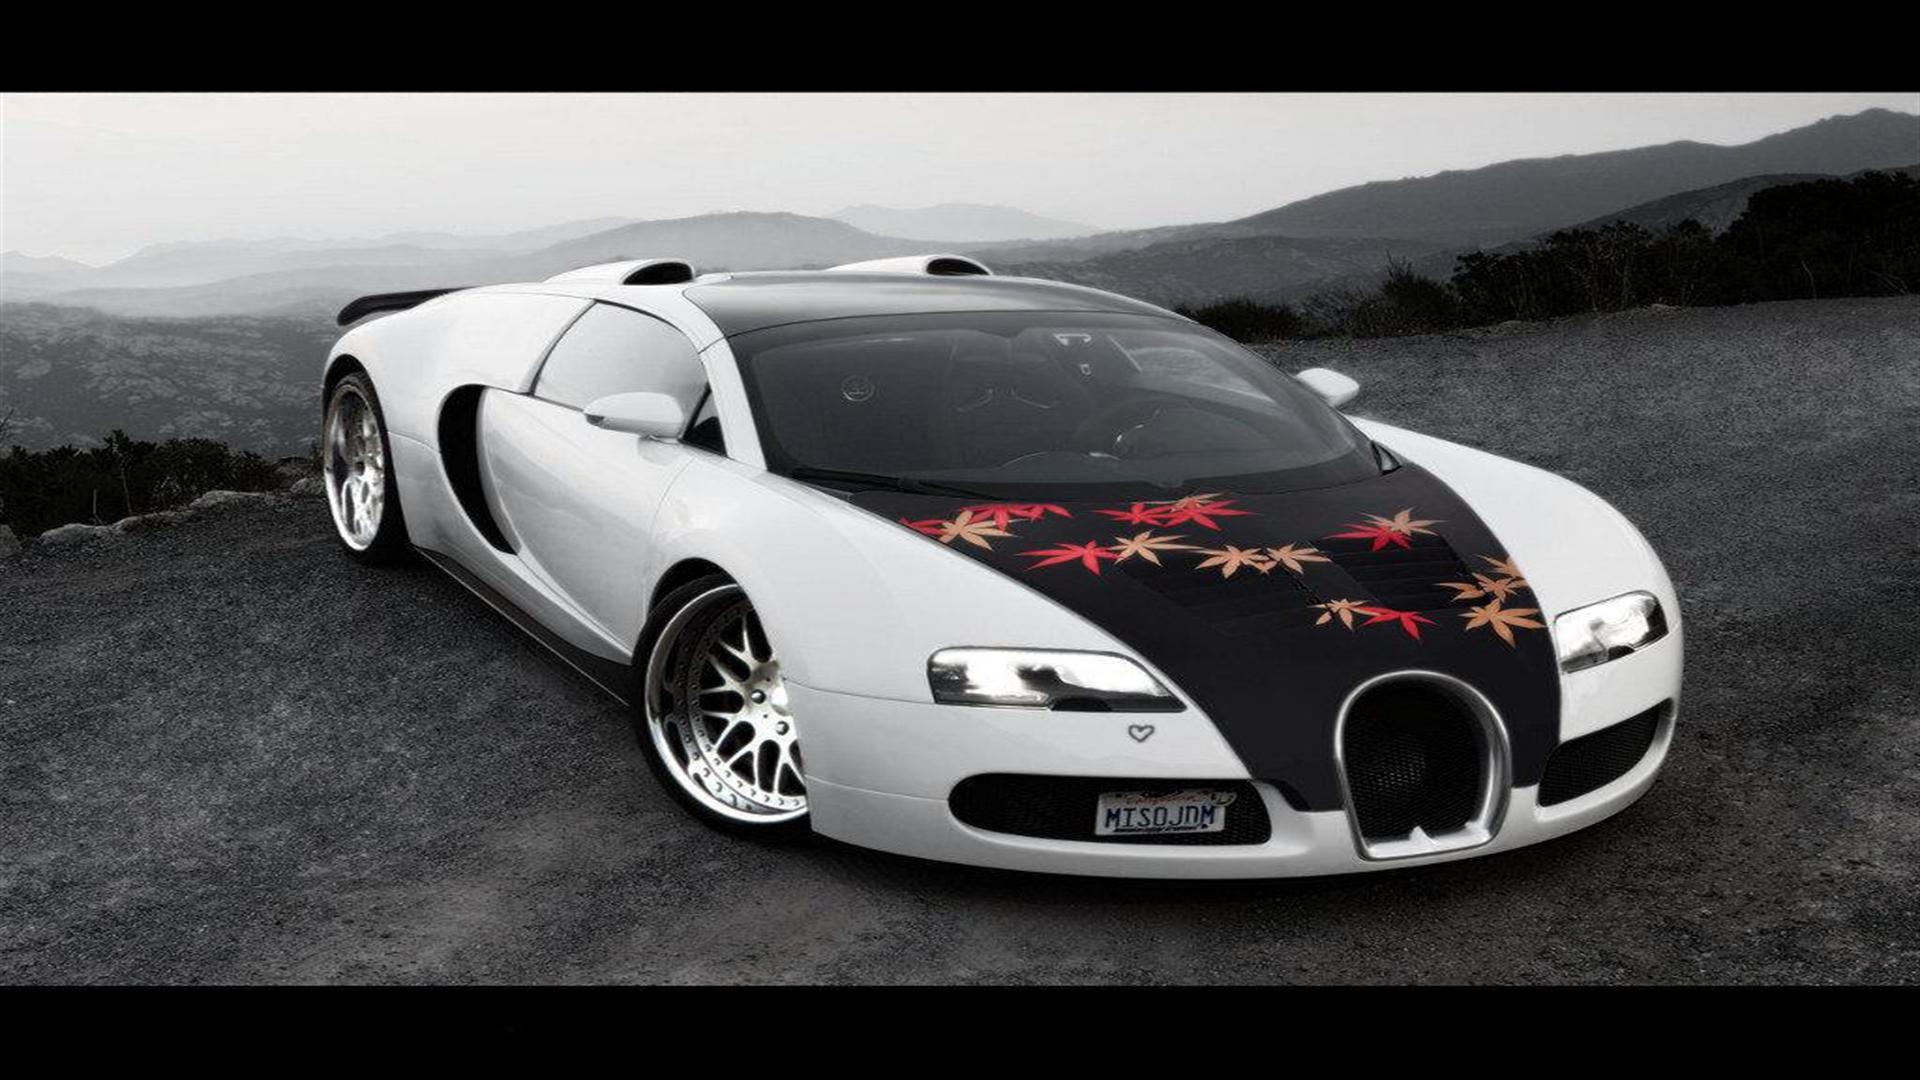 44+] Bugatti Veyron Wallpaper 1080p - WallpaperSafari